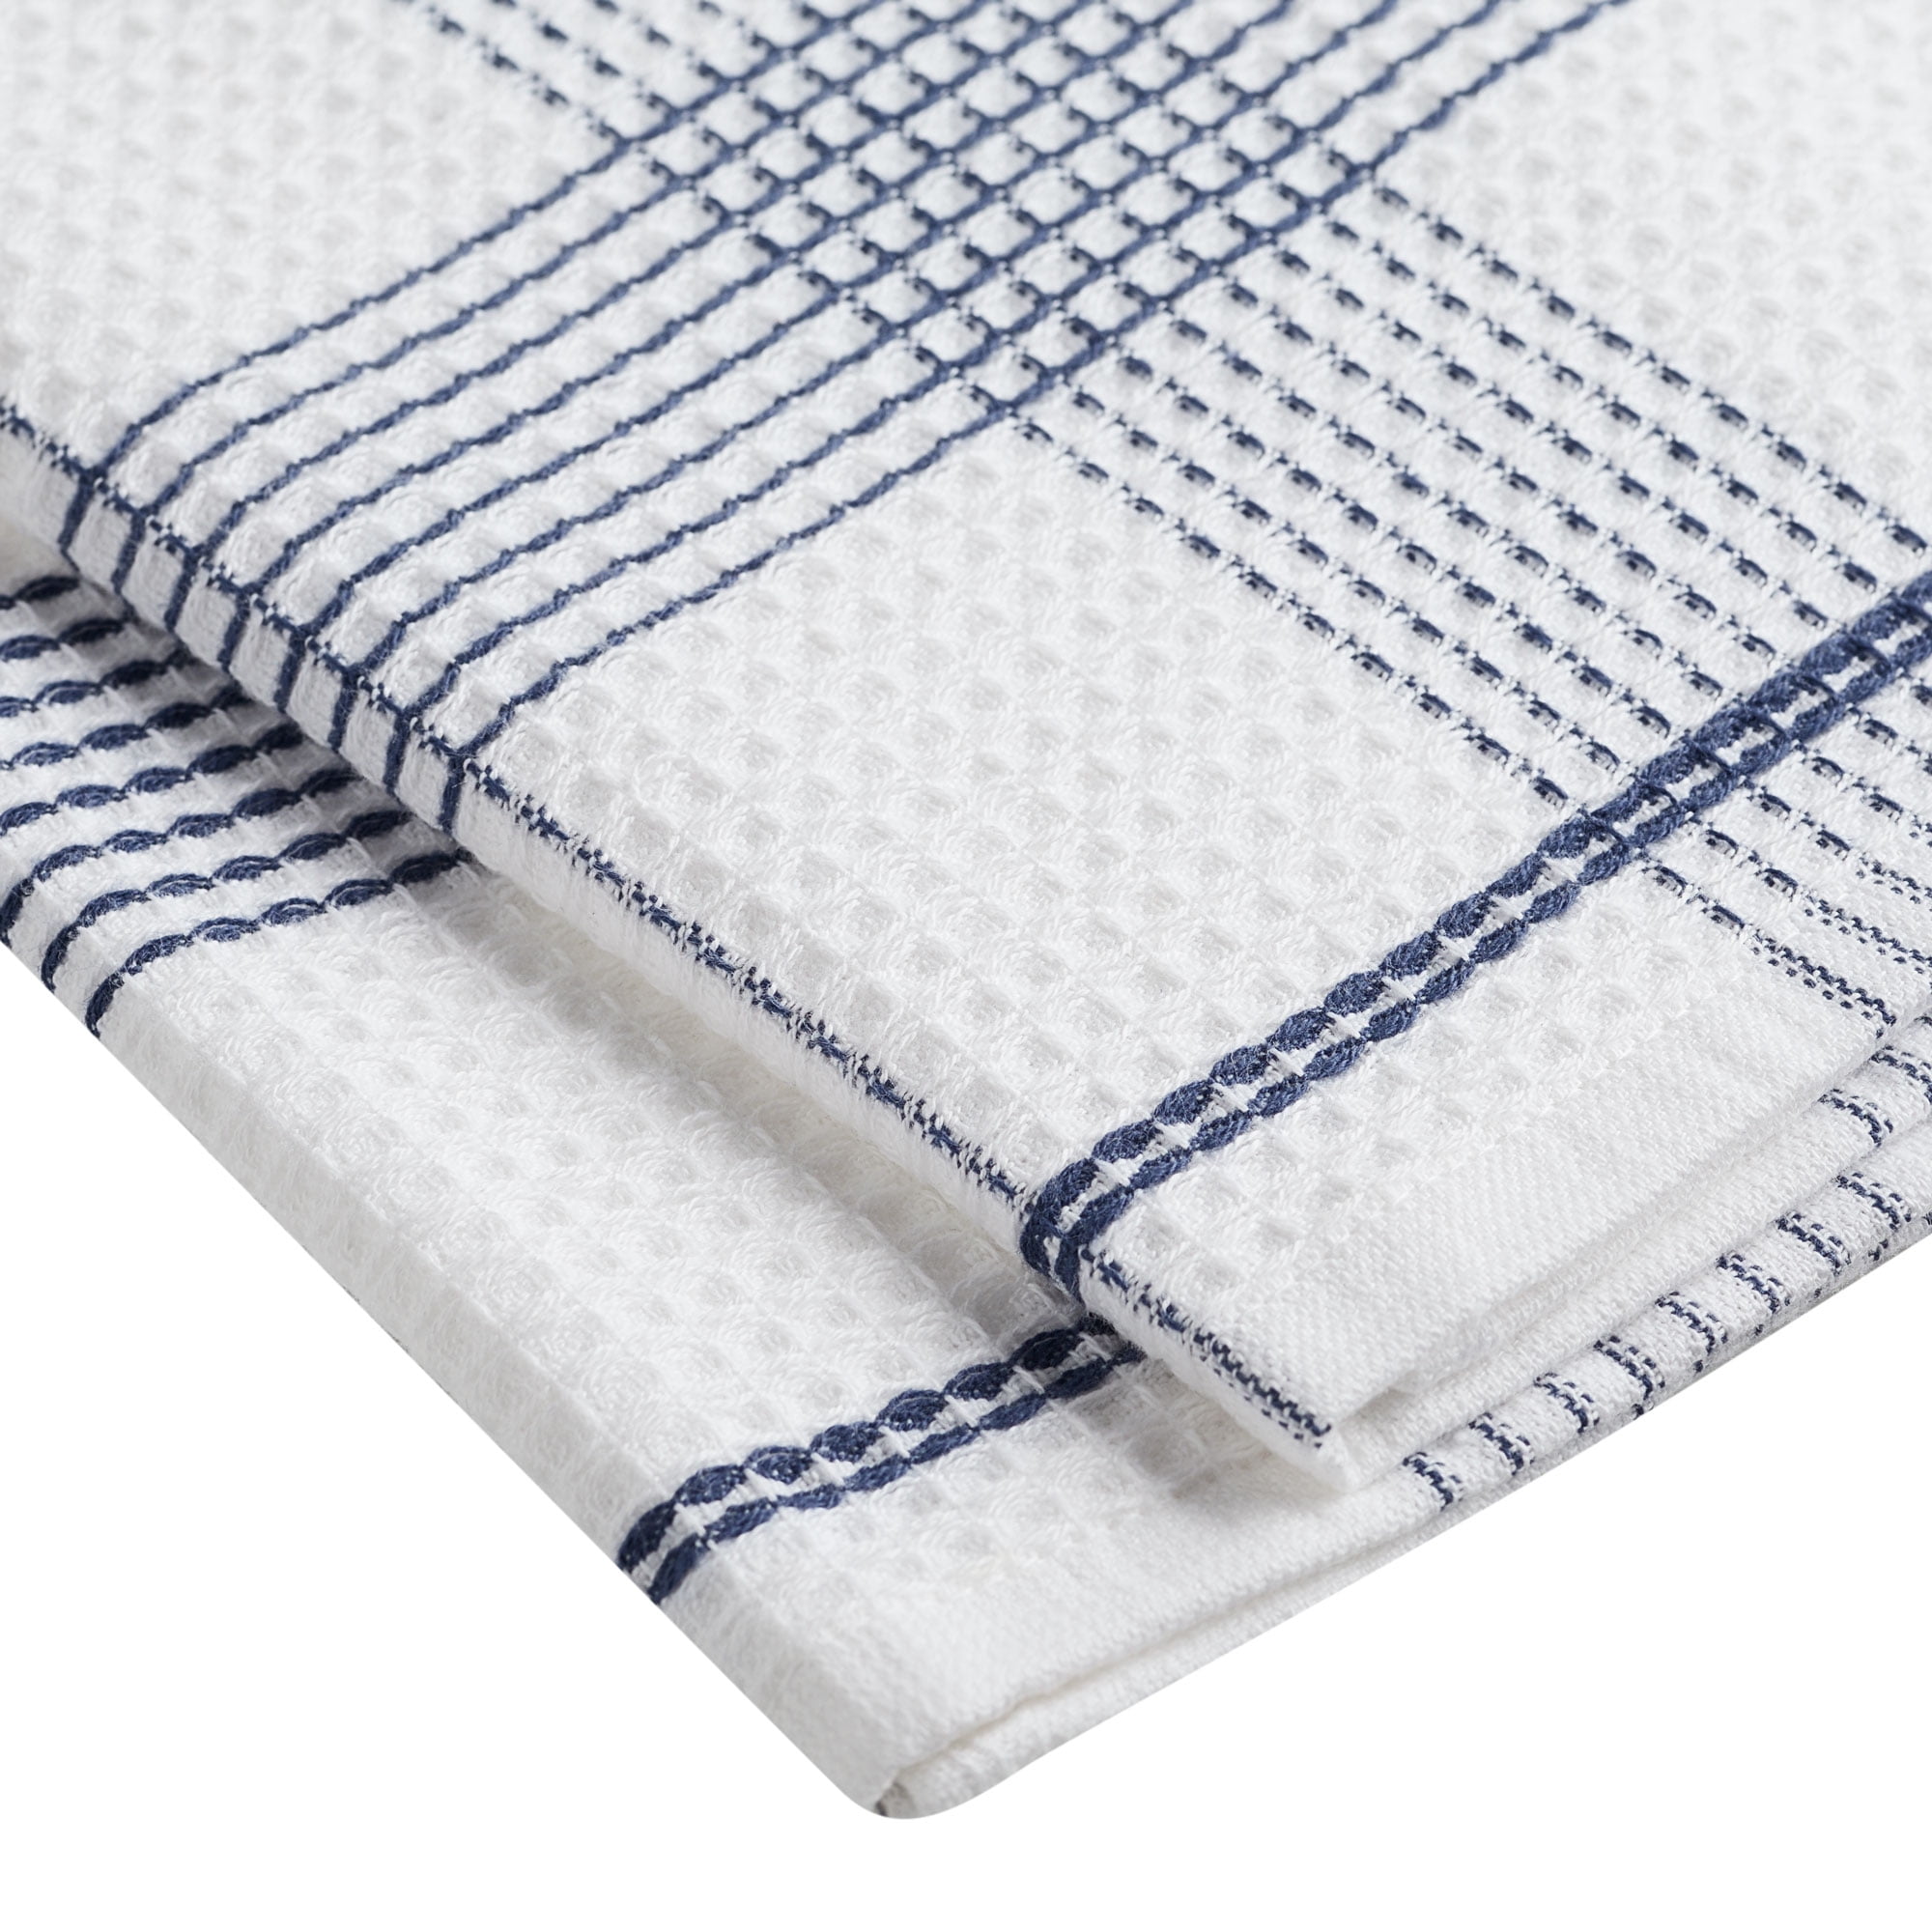 Kitinjoy 100% Cotton Waffle Weave Kitchen Towels, 4-Pack Super